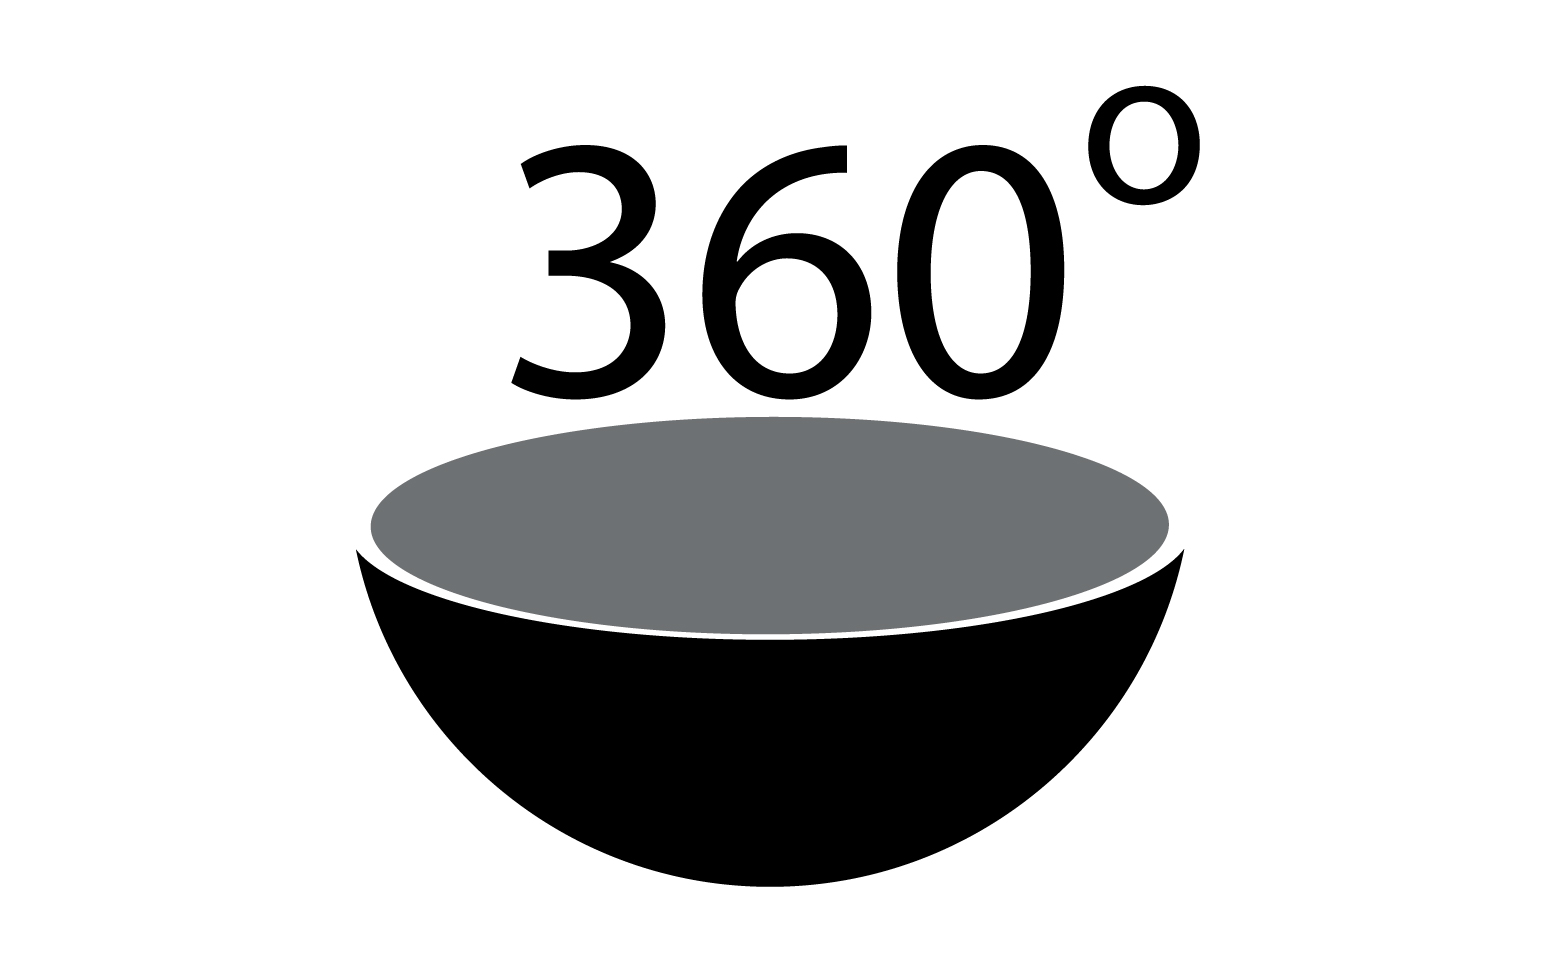 360 degree angle rotation icon symbol logo version v44